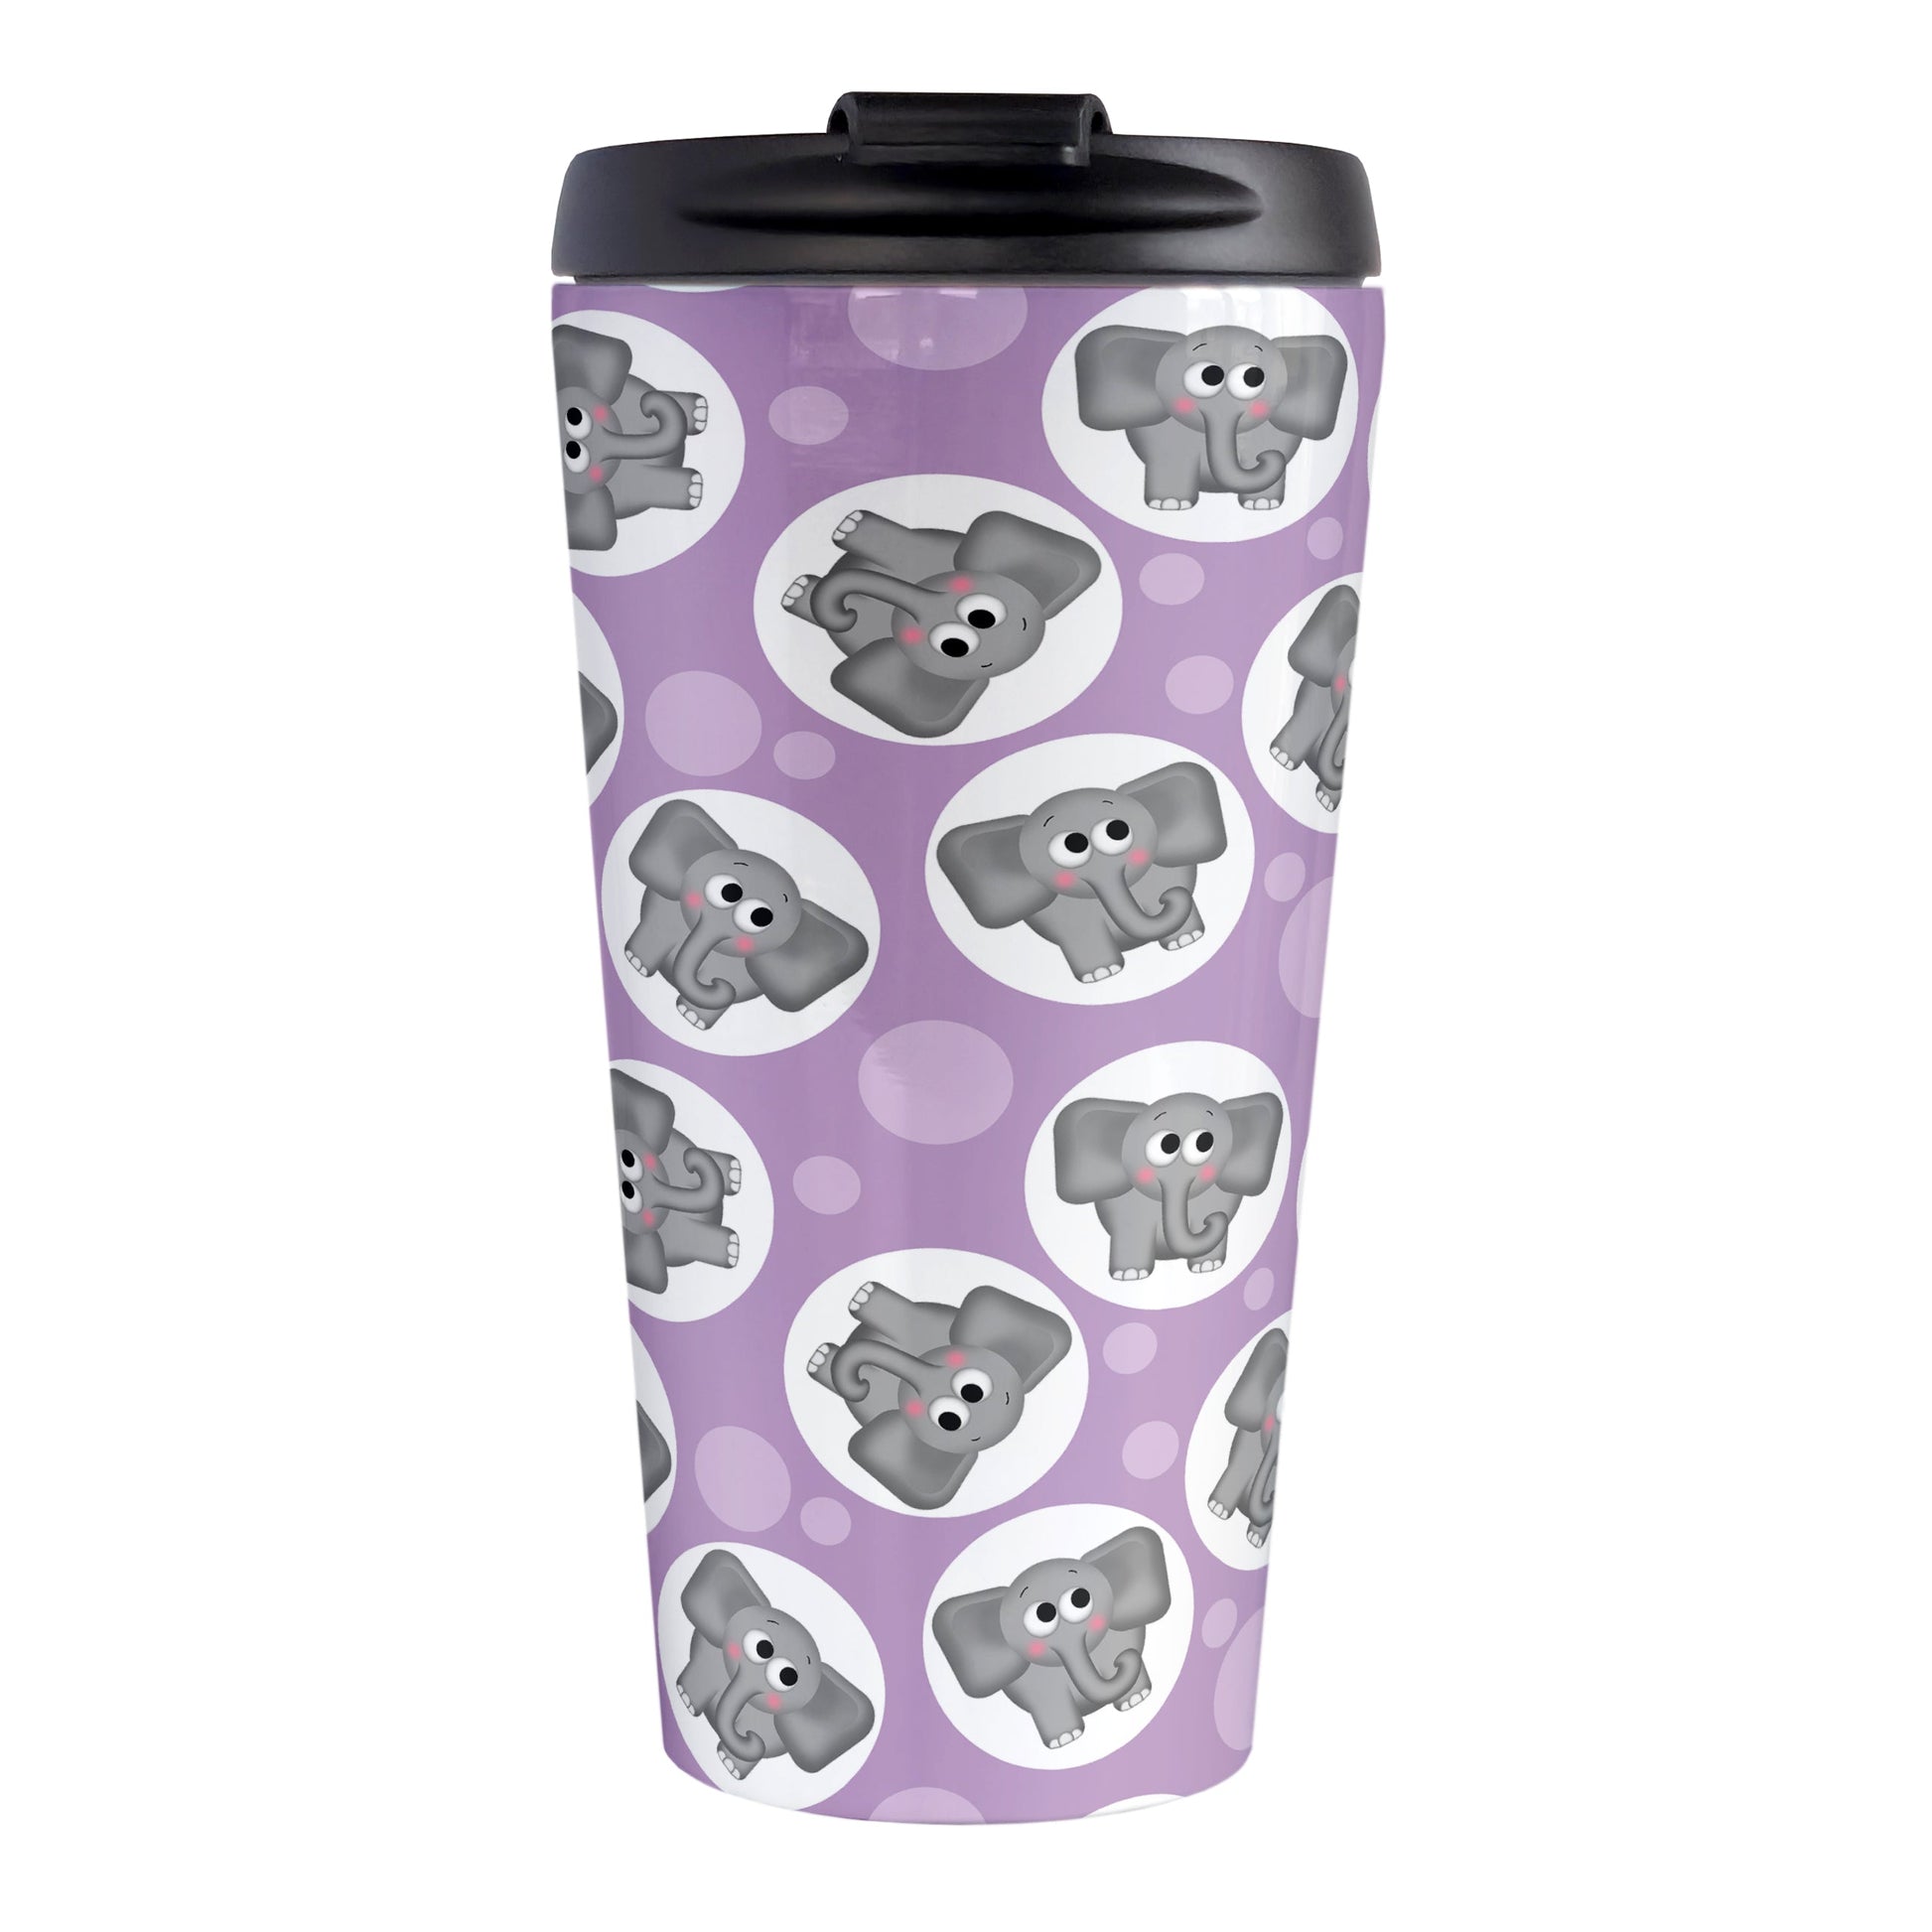 Cute Purple Elephant Pattern Travel Mug (15oz, stainless steel insulated) at Amy's Coffee Mugs